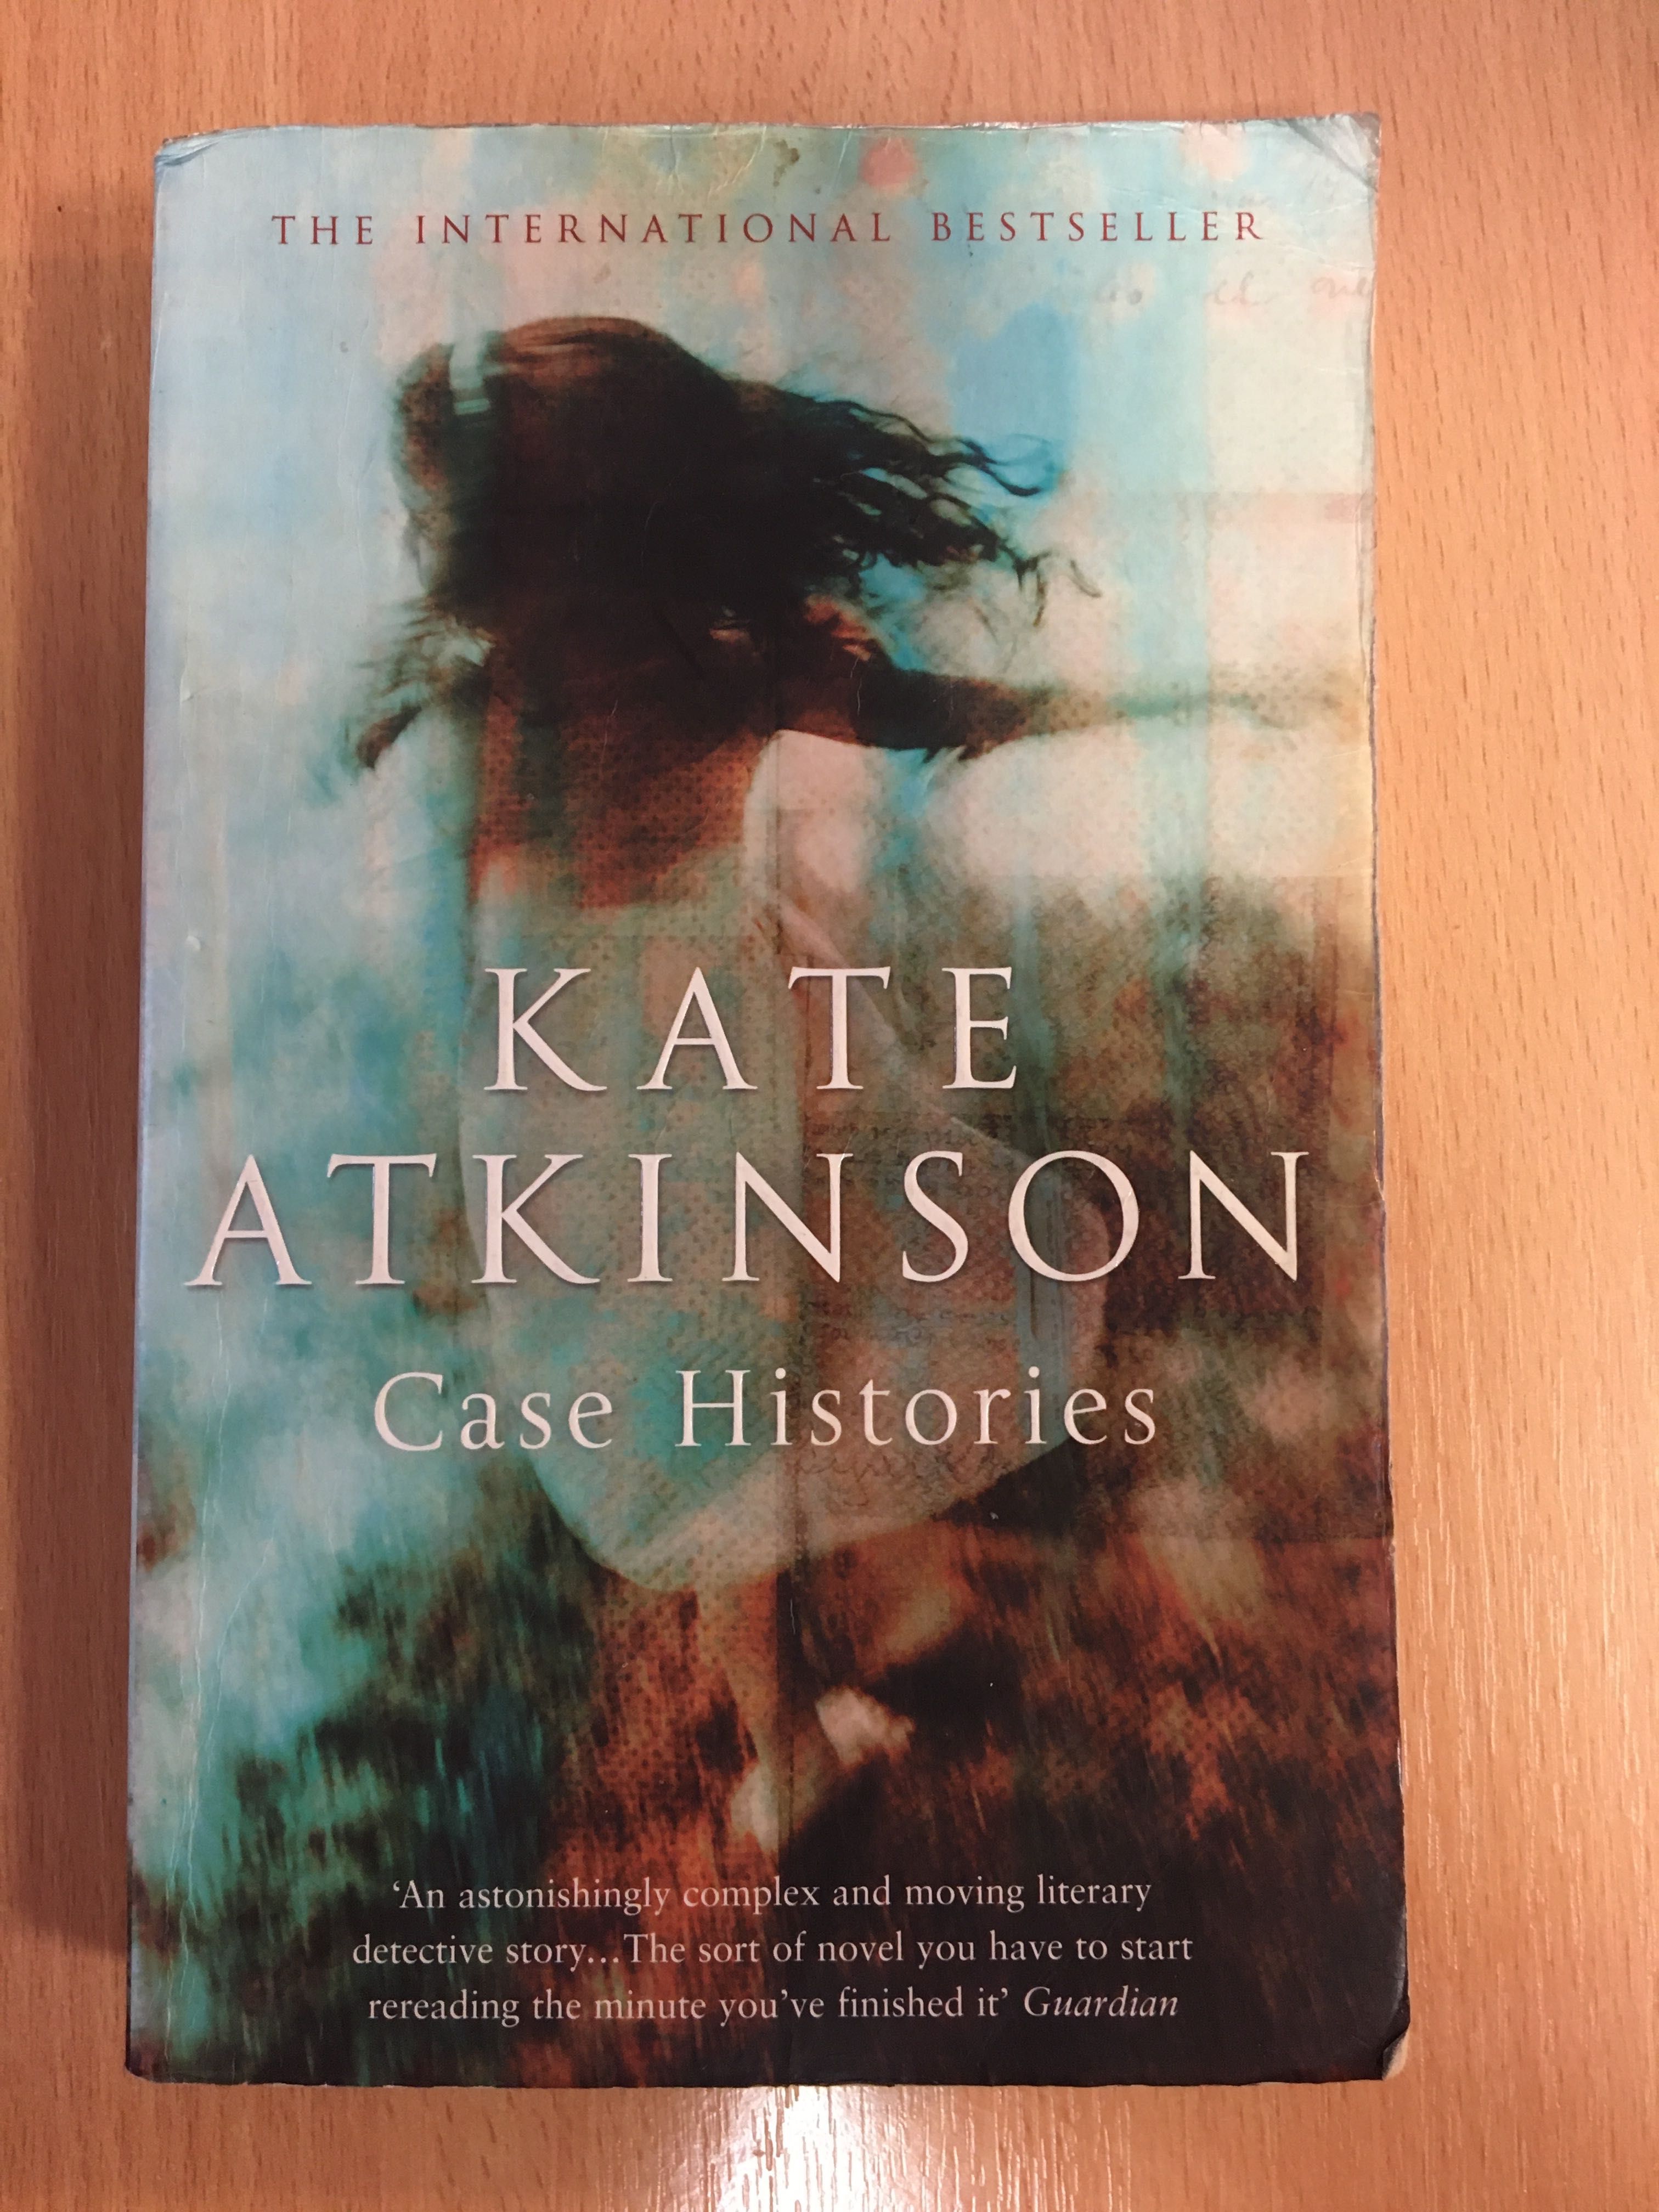 Kate Atkinson "Case Histories"